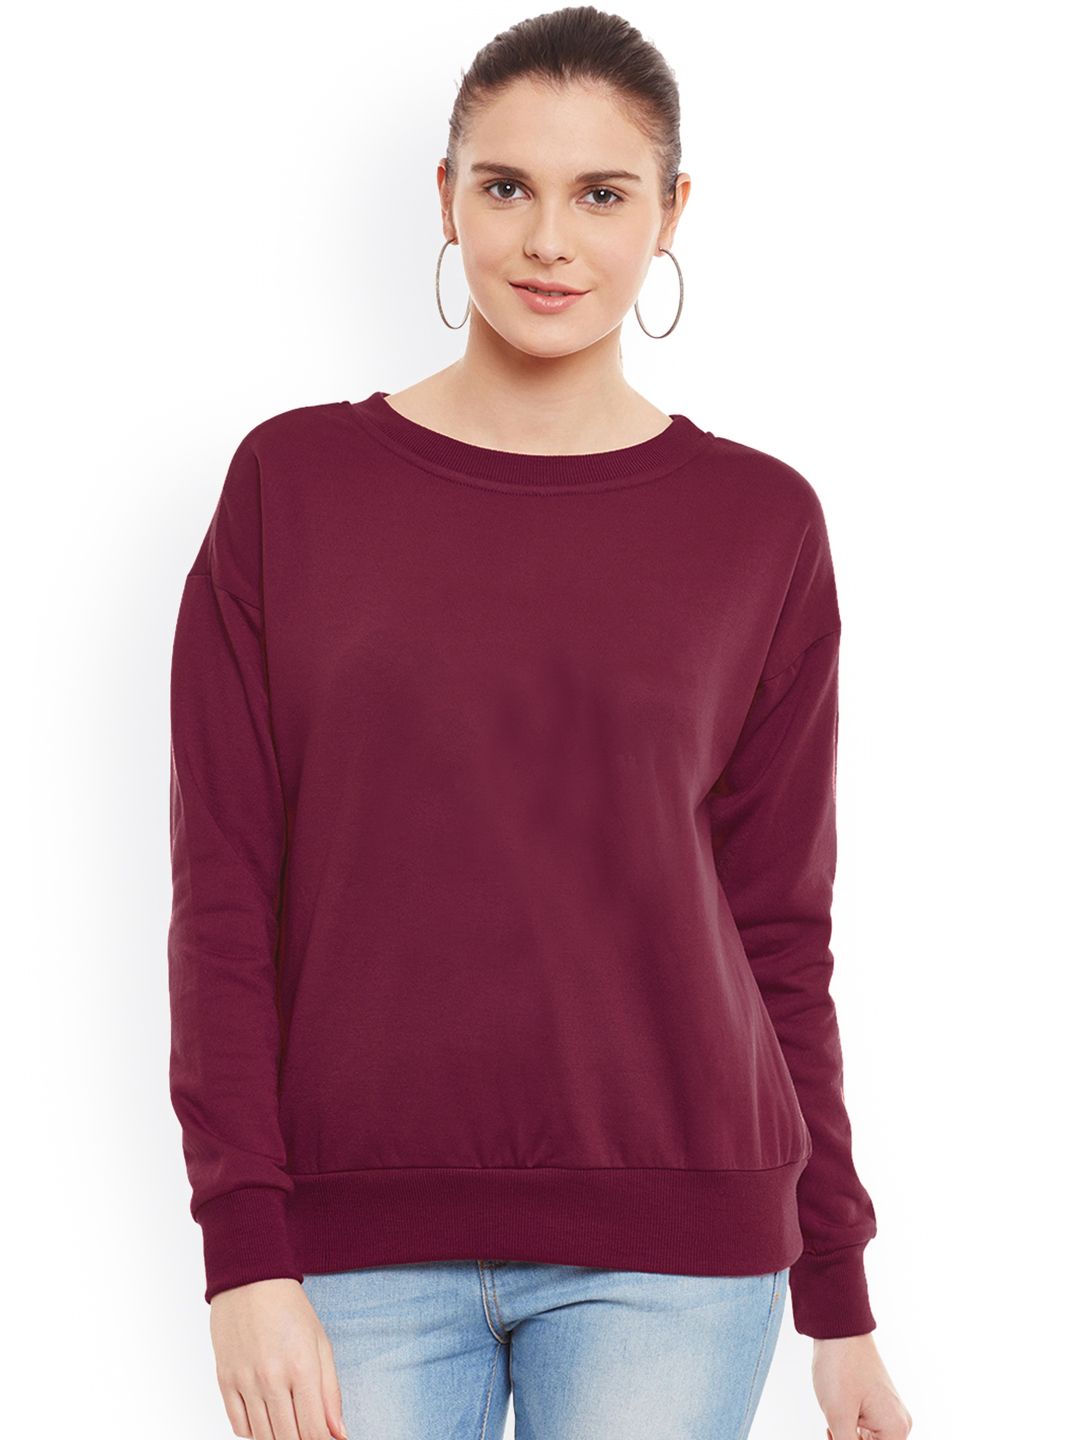 Belle Fille Maroon Sweatshirt Price in India